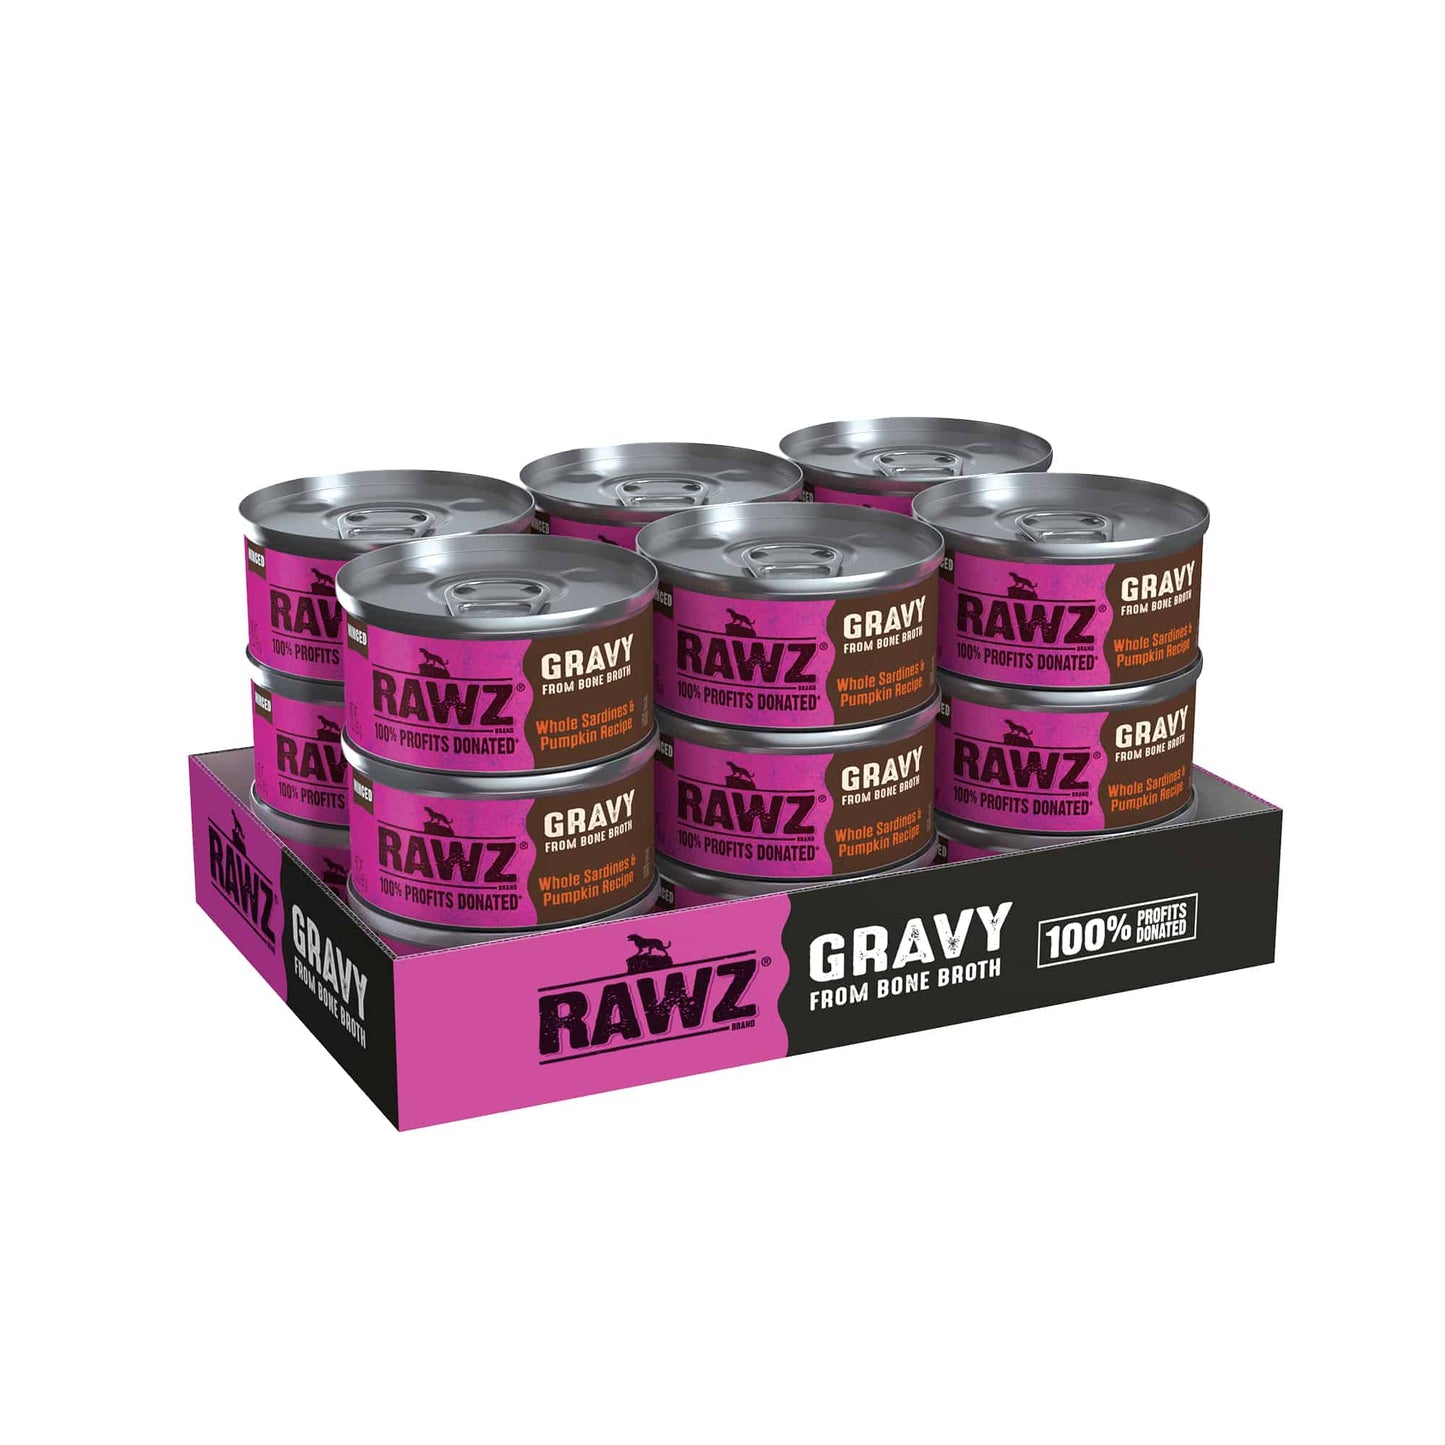 RAWZ Gravy Whole Sardines & Pumpkin Canned Cat Food